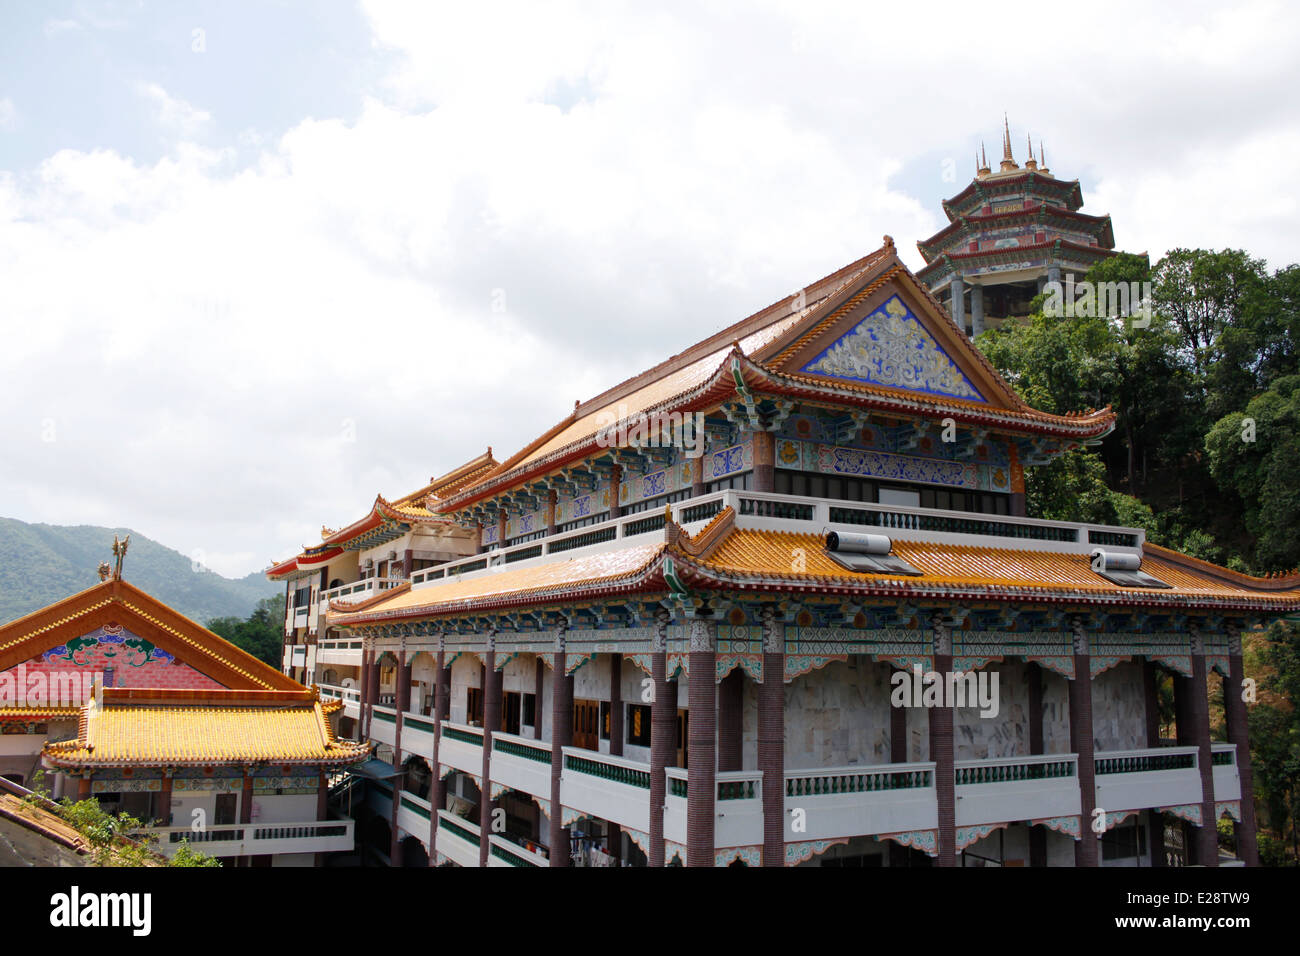 Kek Lo Si temple, Buddhist temple, Air Itam, Penang, Malaysia. Stock Photo